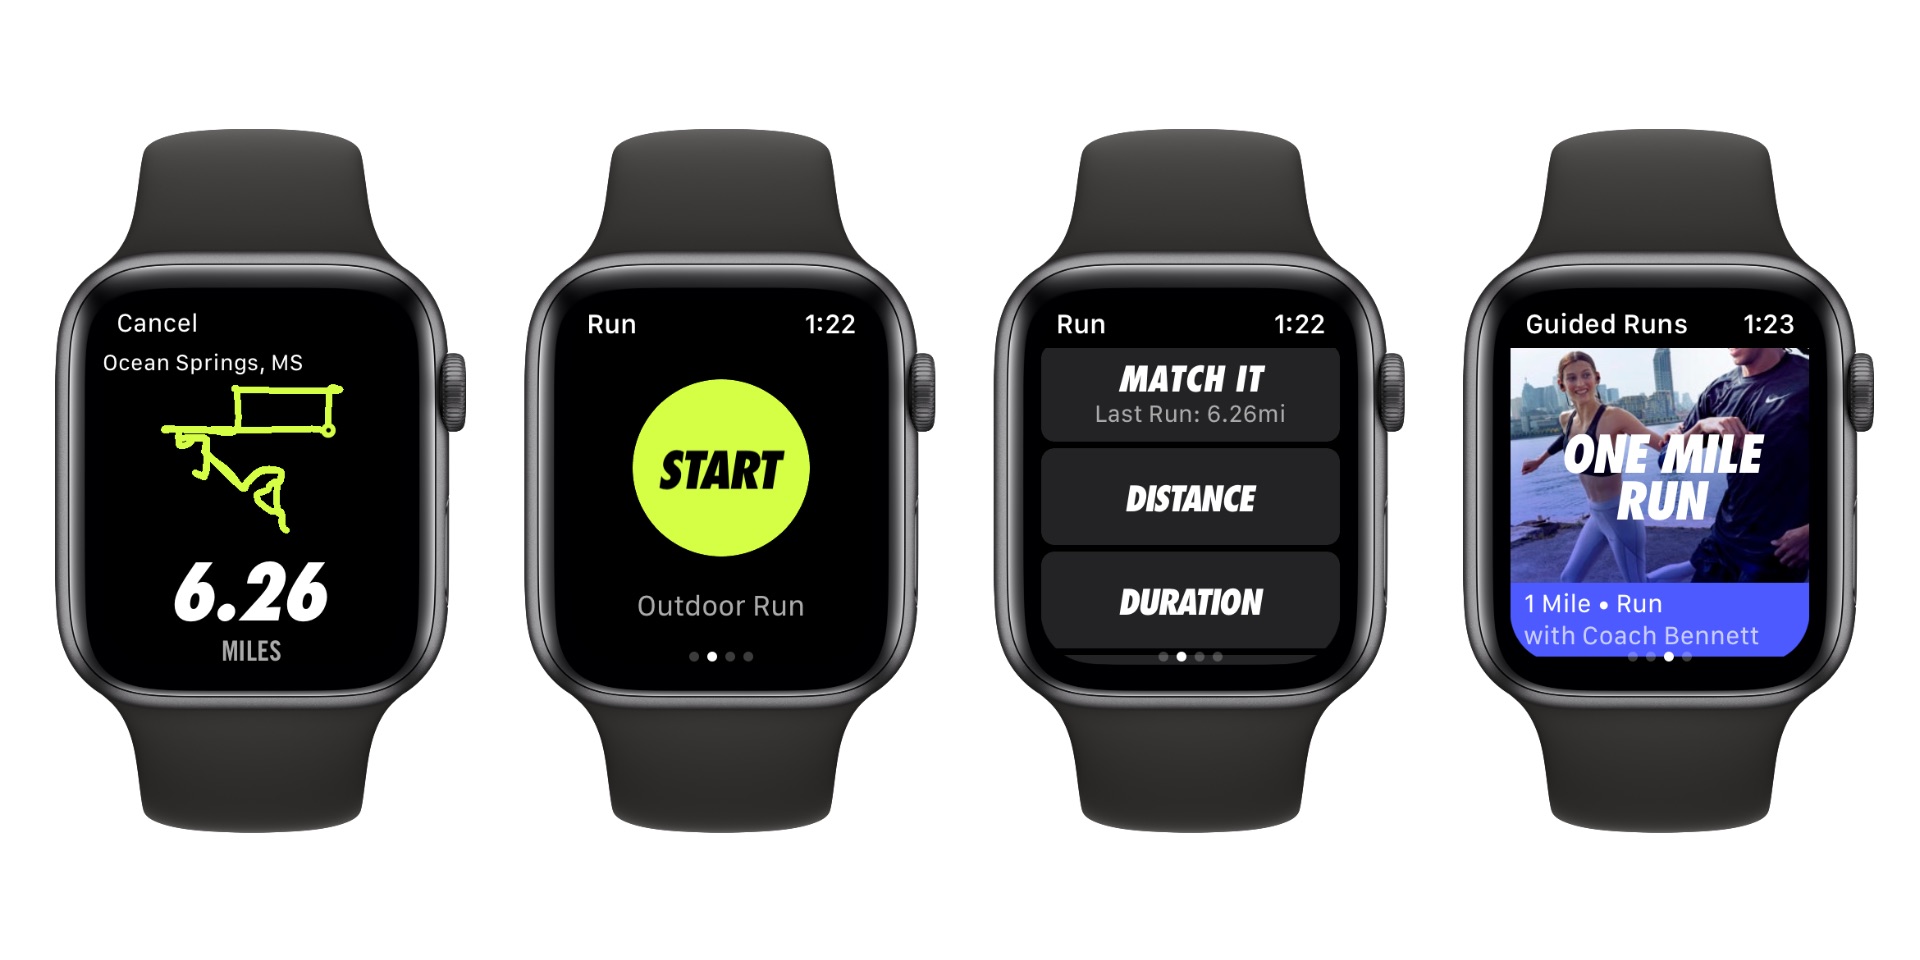 Ridículo Conmemorativo Rebajar Nike+ Run Club now optimized for Apple Watch Series 4 - 9to5Mac